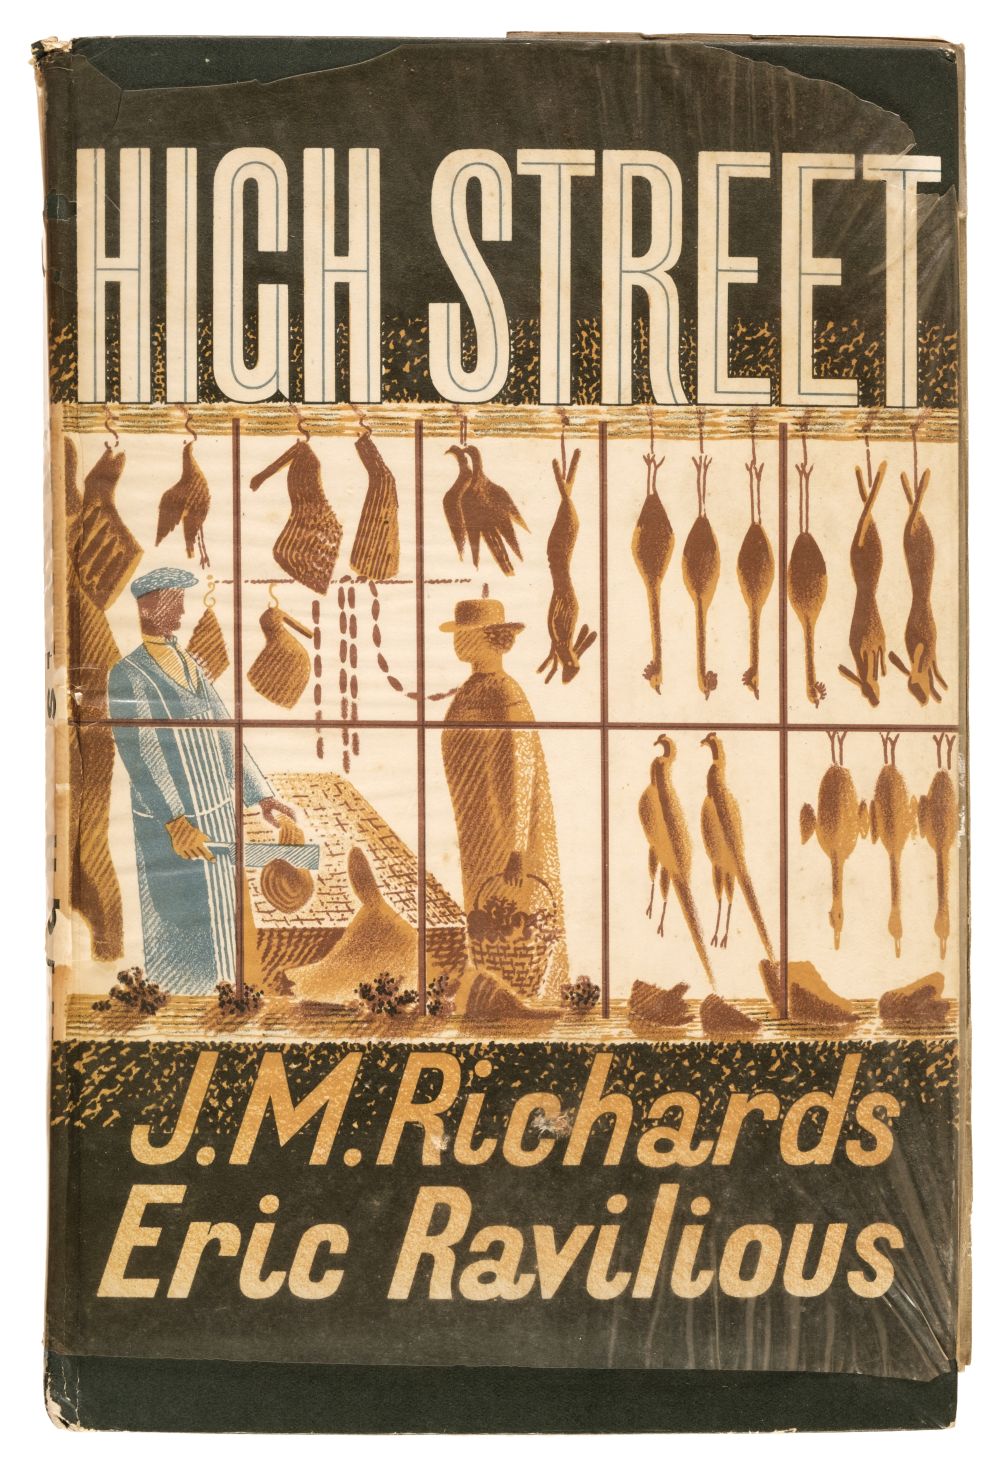 Richards (J.M. & Eric Ravilious). High Street, 1st edition, presentation copy, 1938